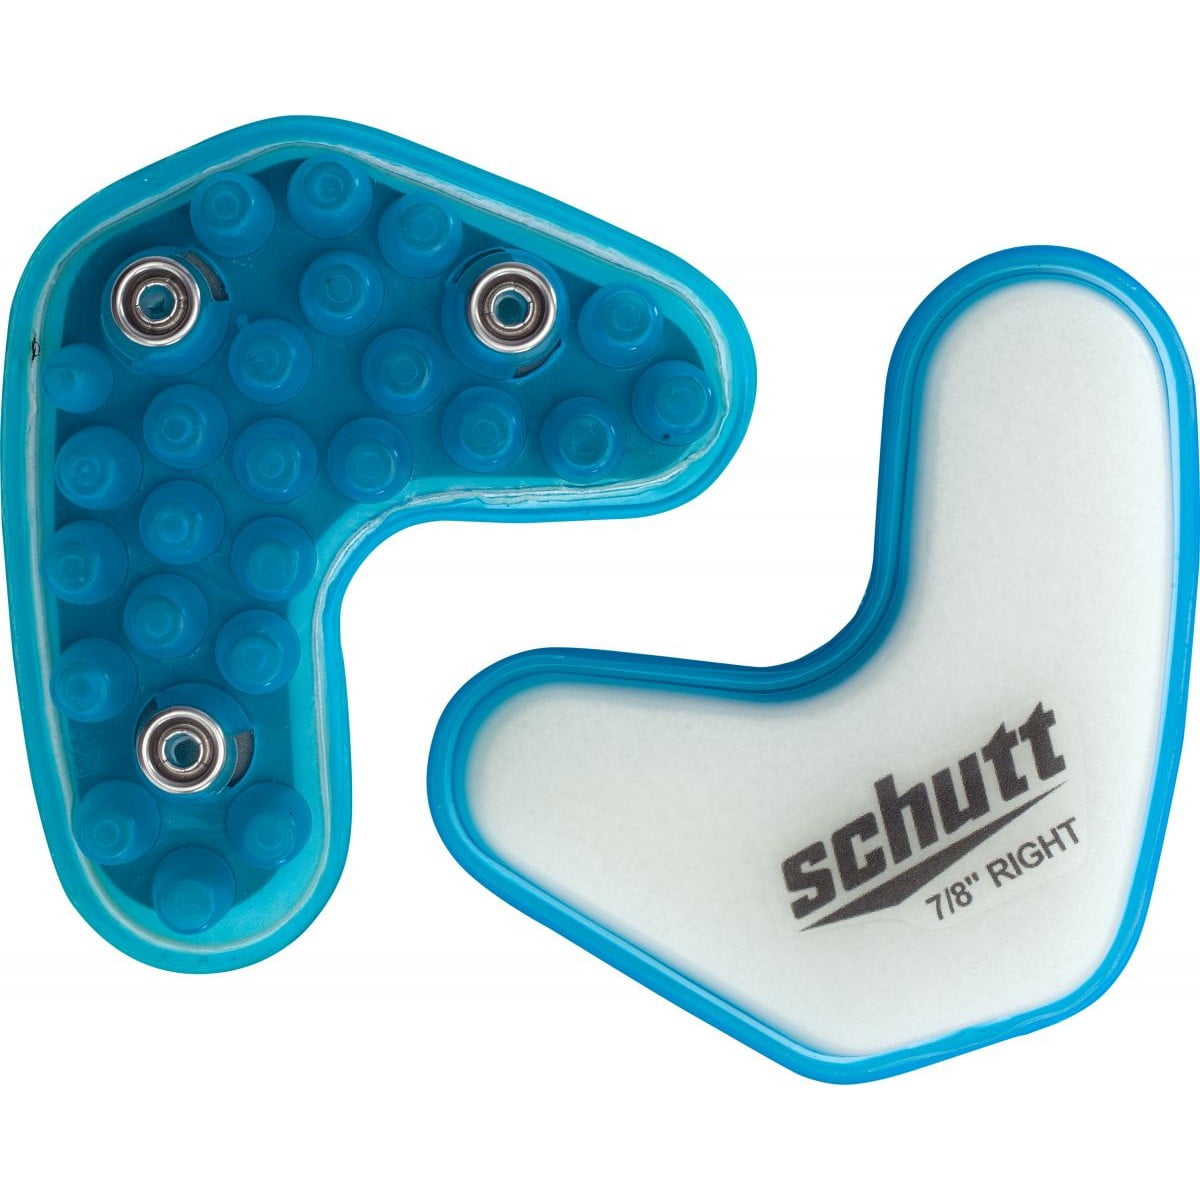 Schutt AiR Maxx TPU Football Helmet Jaw Pads Adult or Youth Size 1 1/8" 